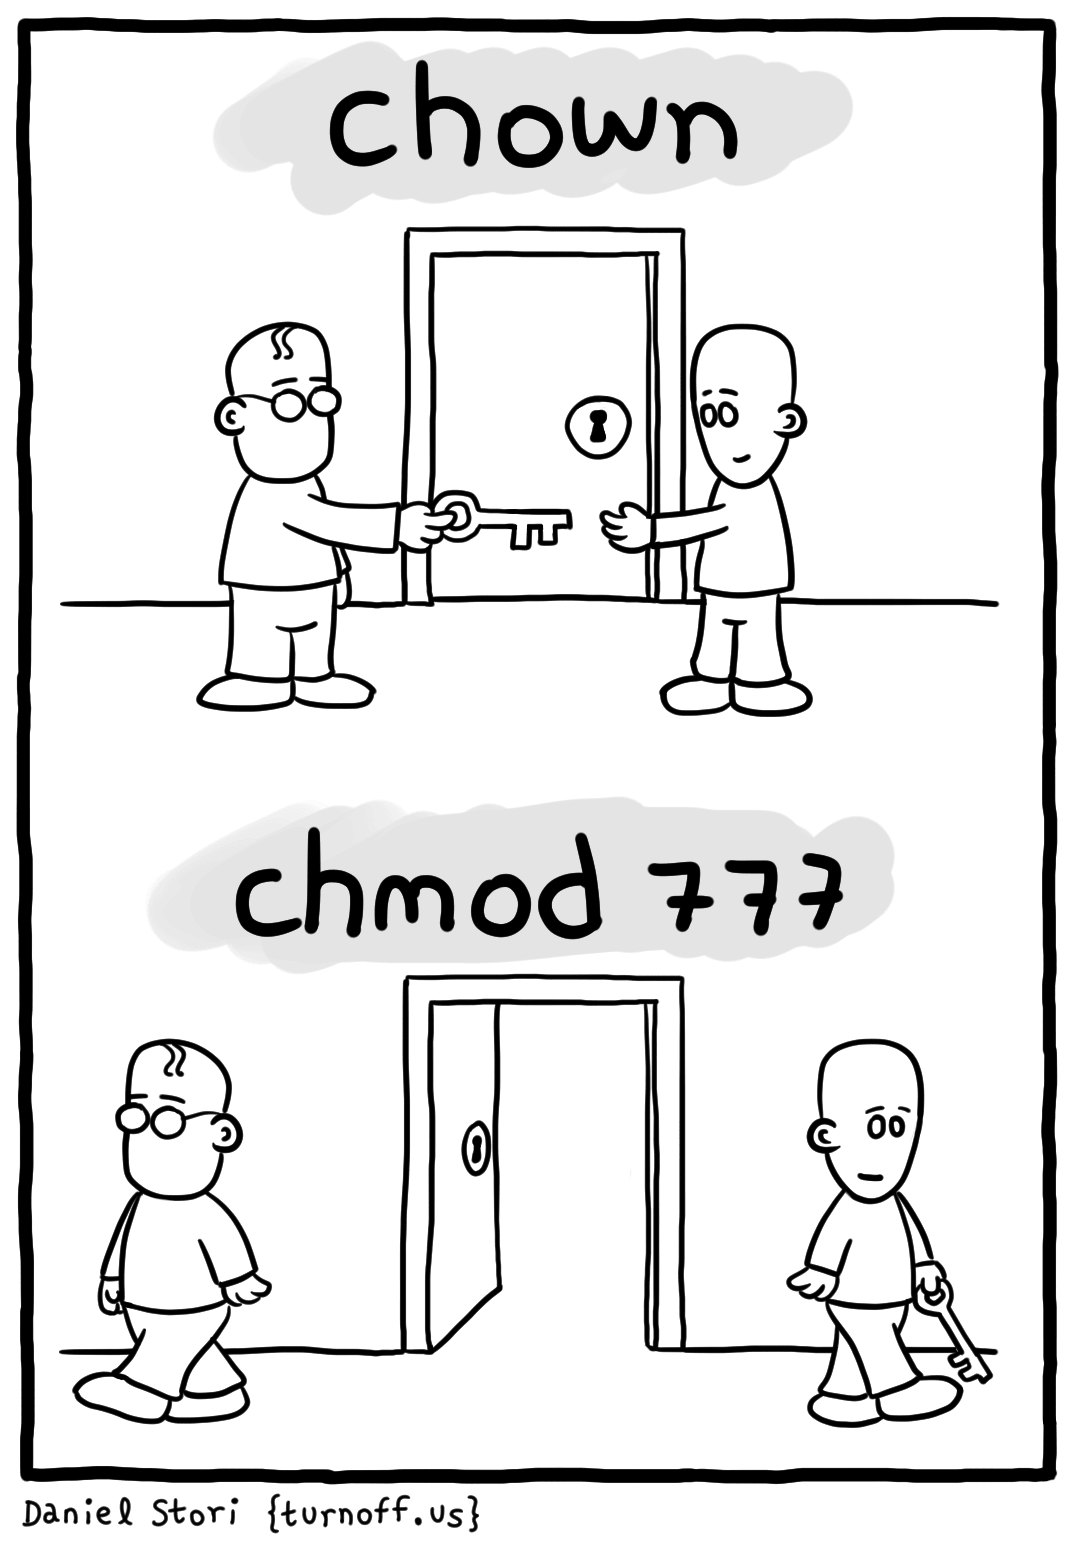 chown - chmod